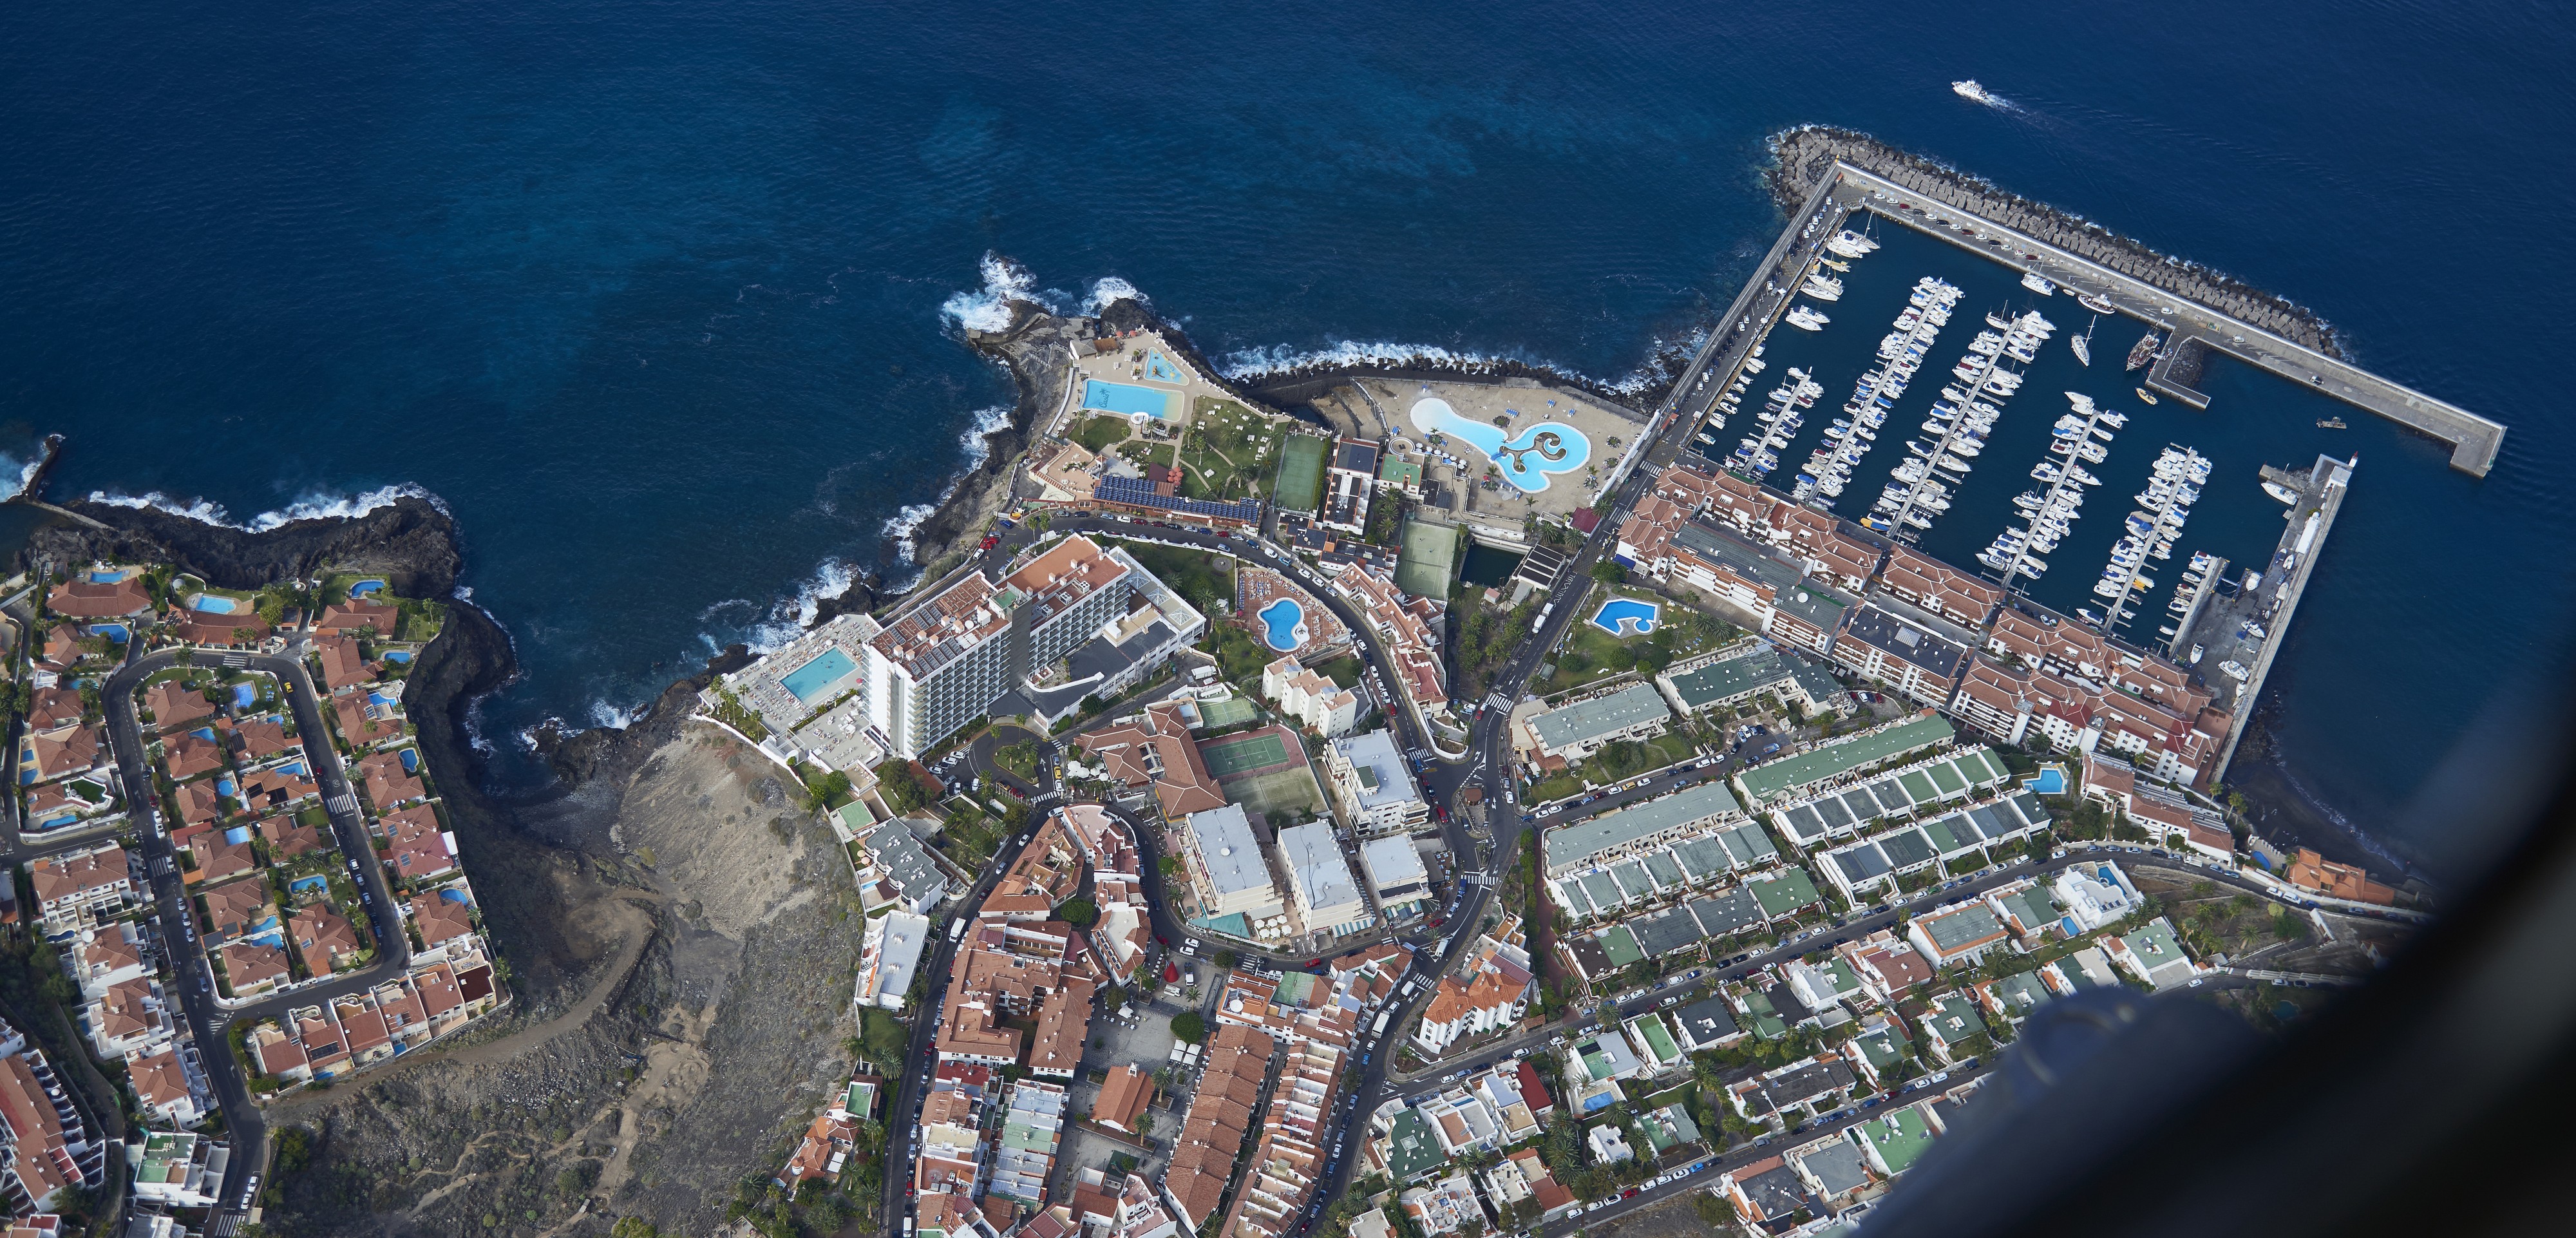 A0230 Tenerife, Los Gigantes aerial view